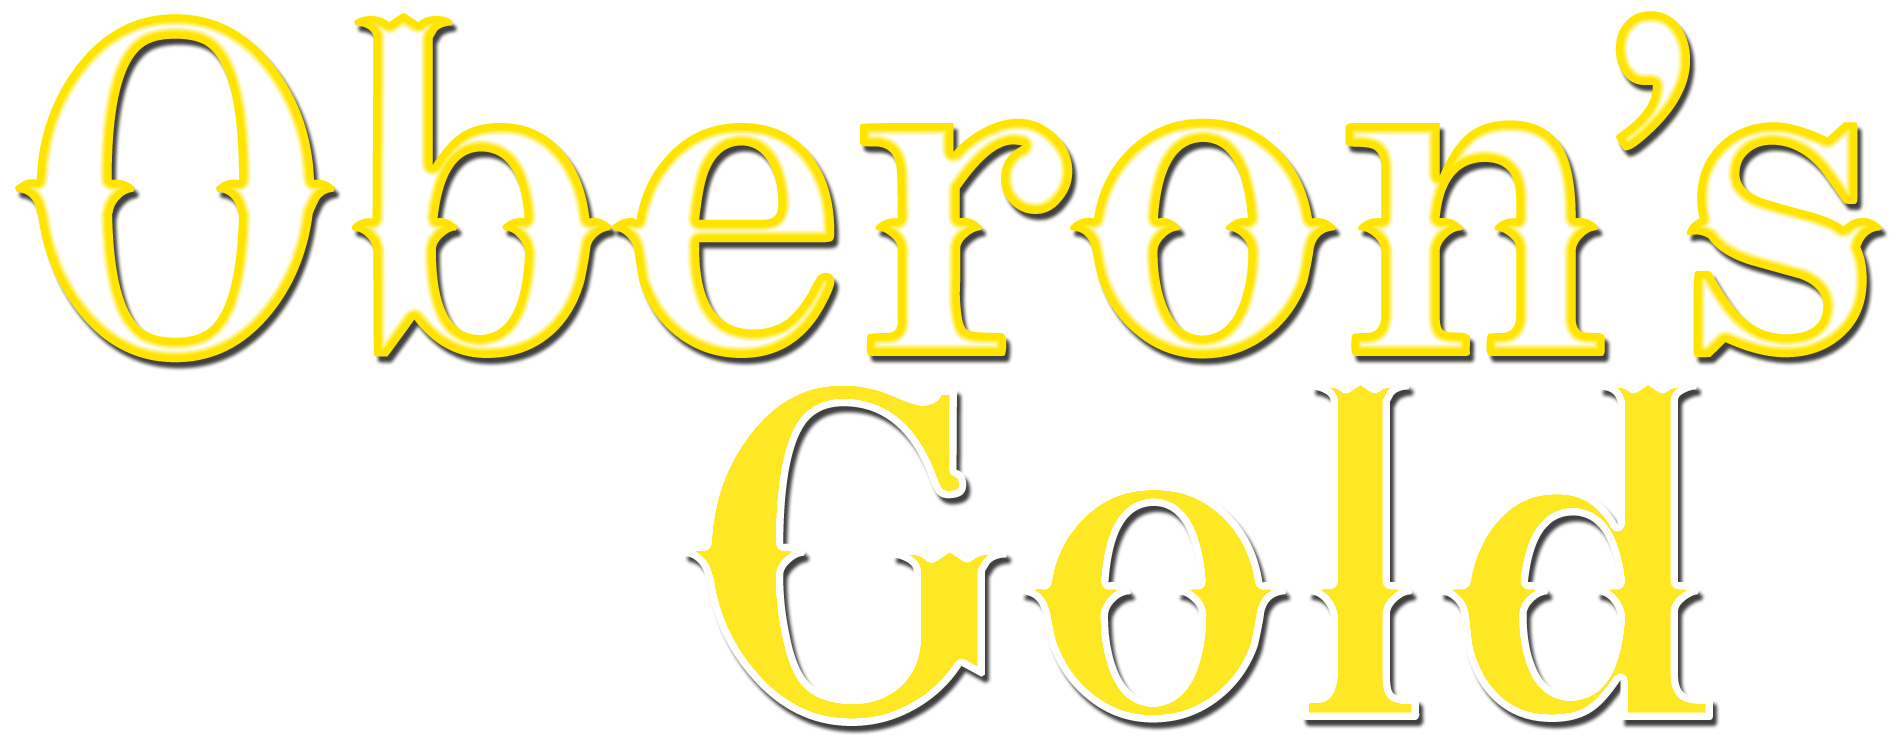 Oberon's Gold (2014) film title.